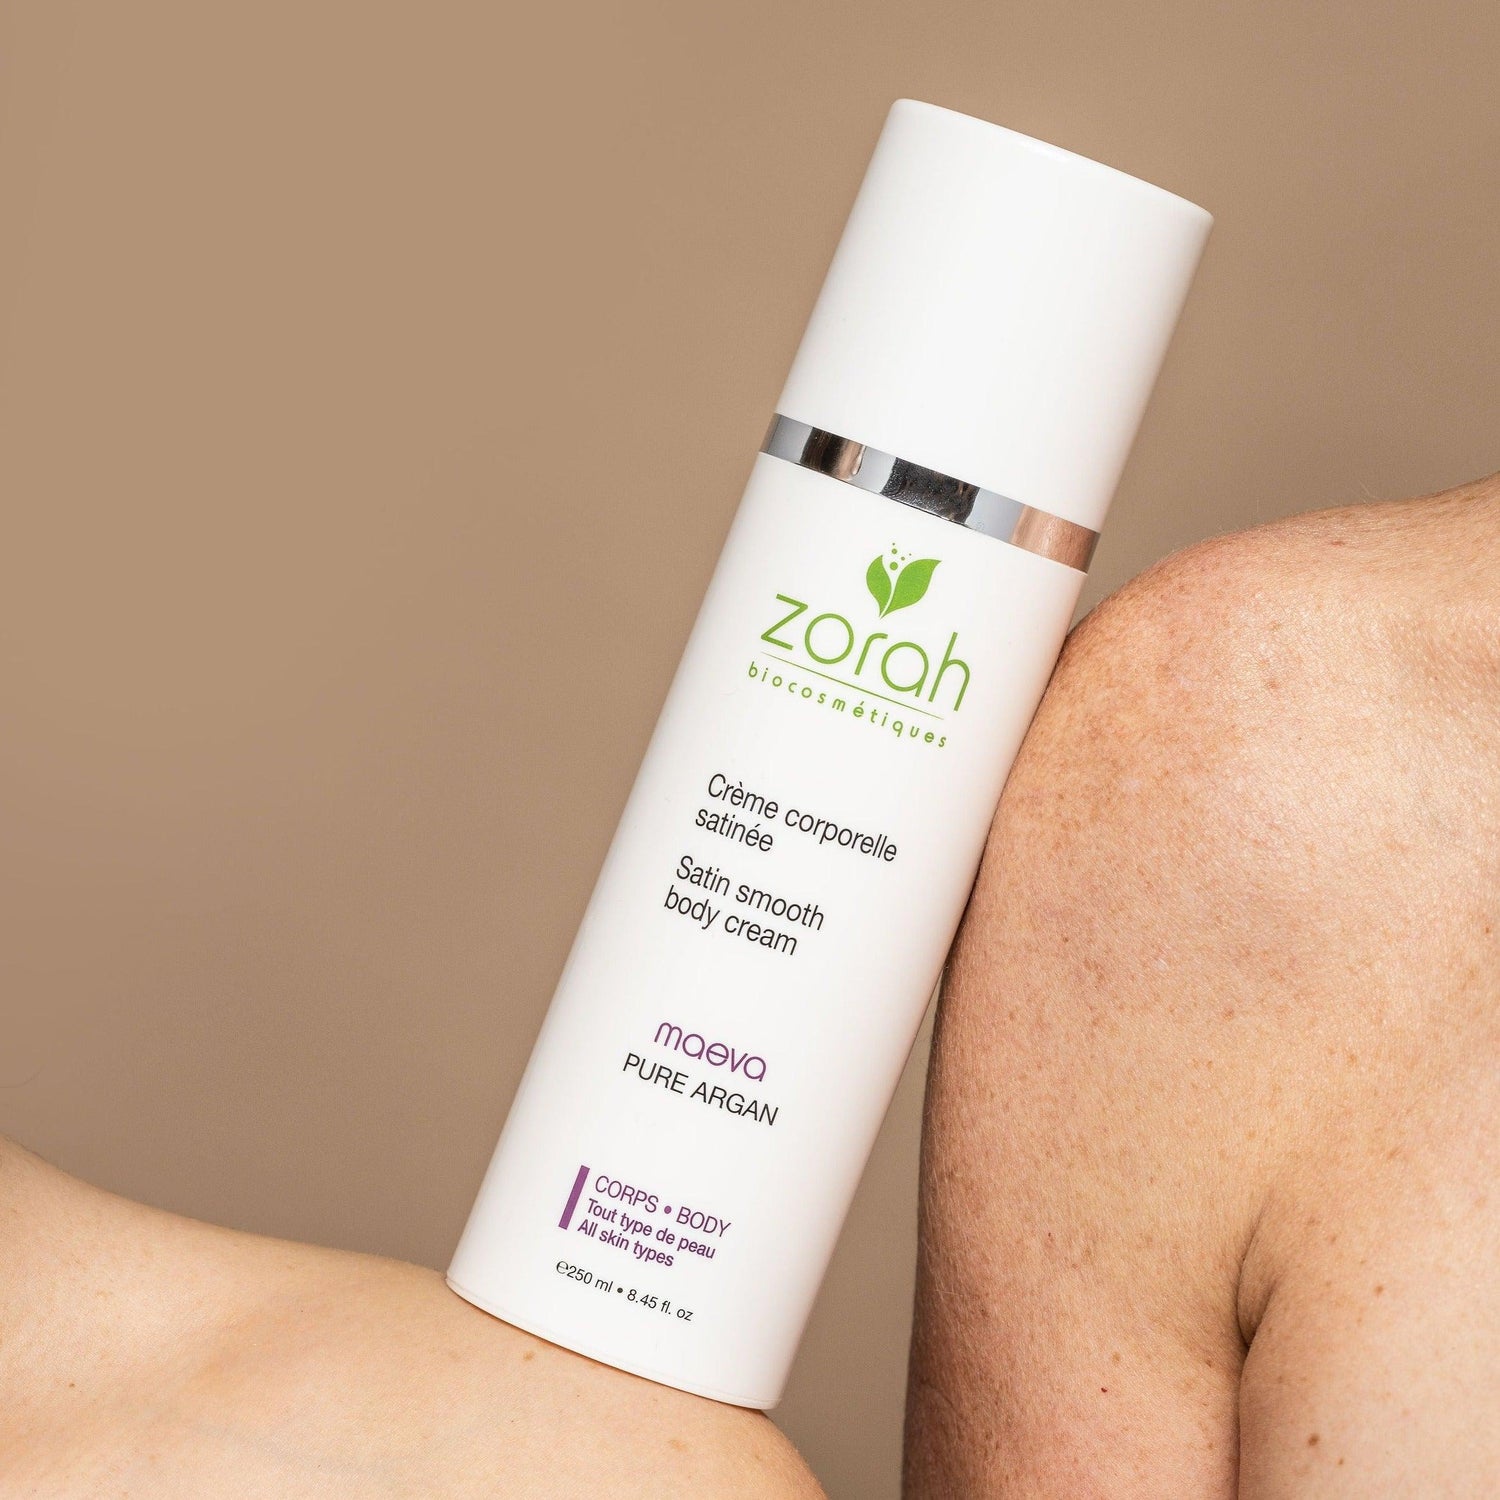 maeva | satin-finish moisturizing body cream - Zorah biocosmétiques